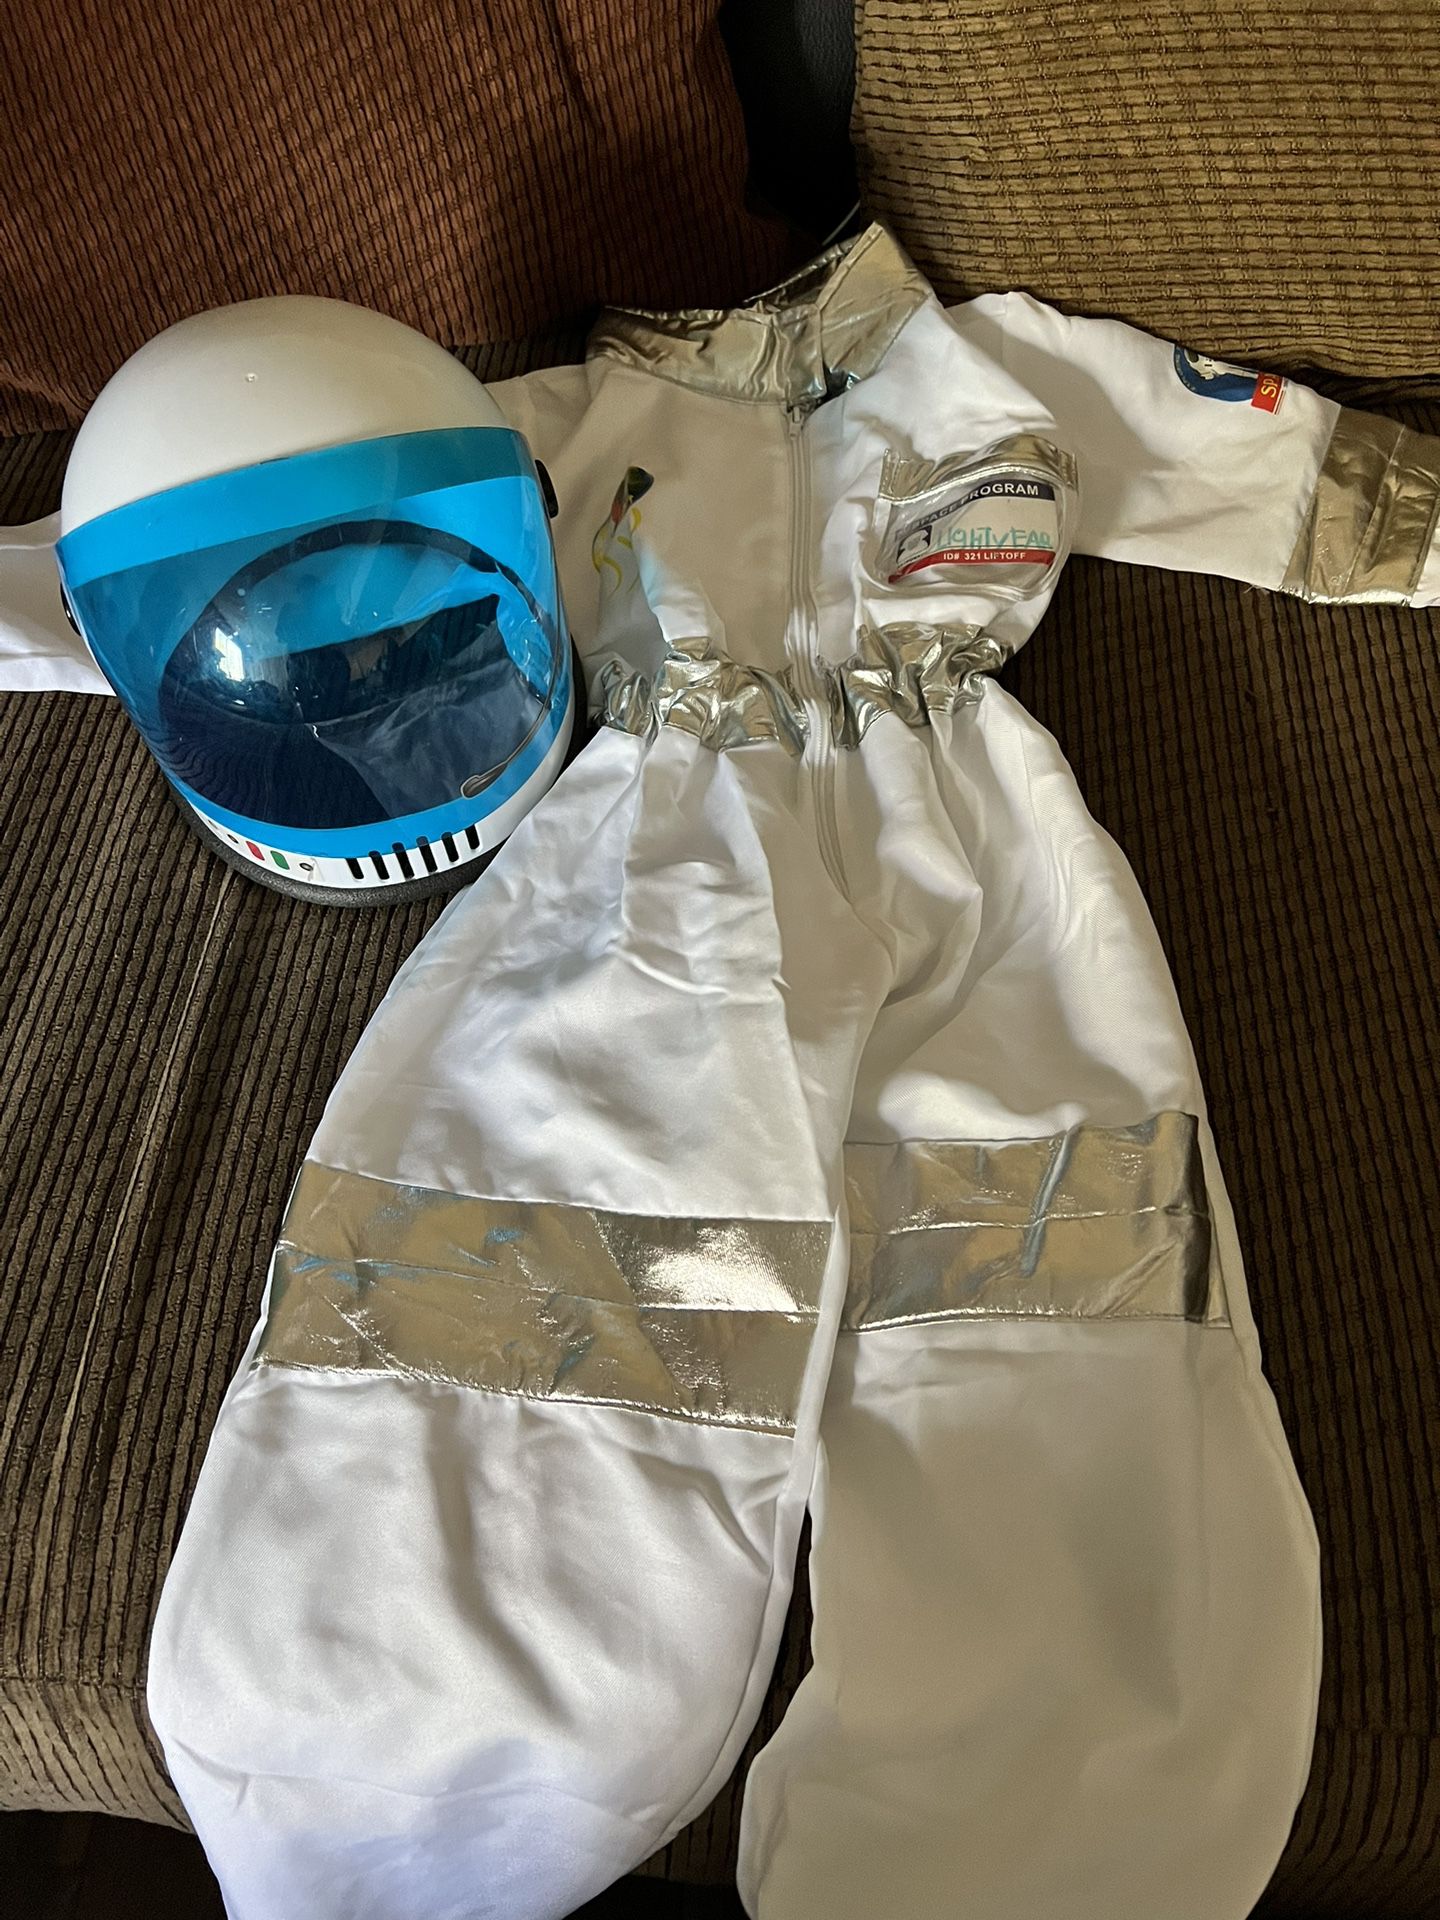 Kids Spaceman Costume 